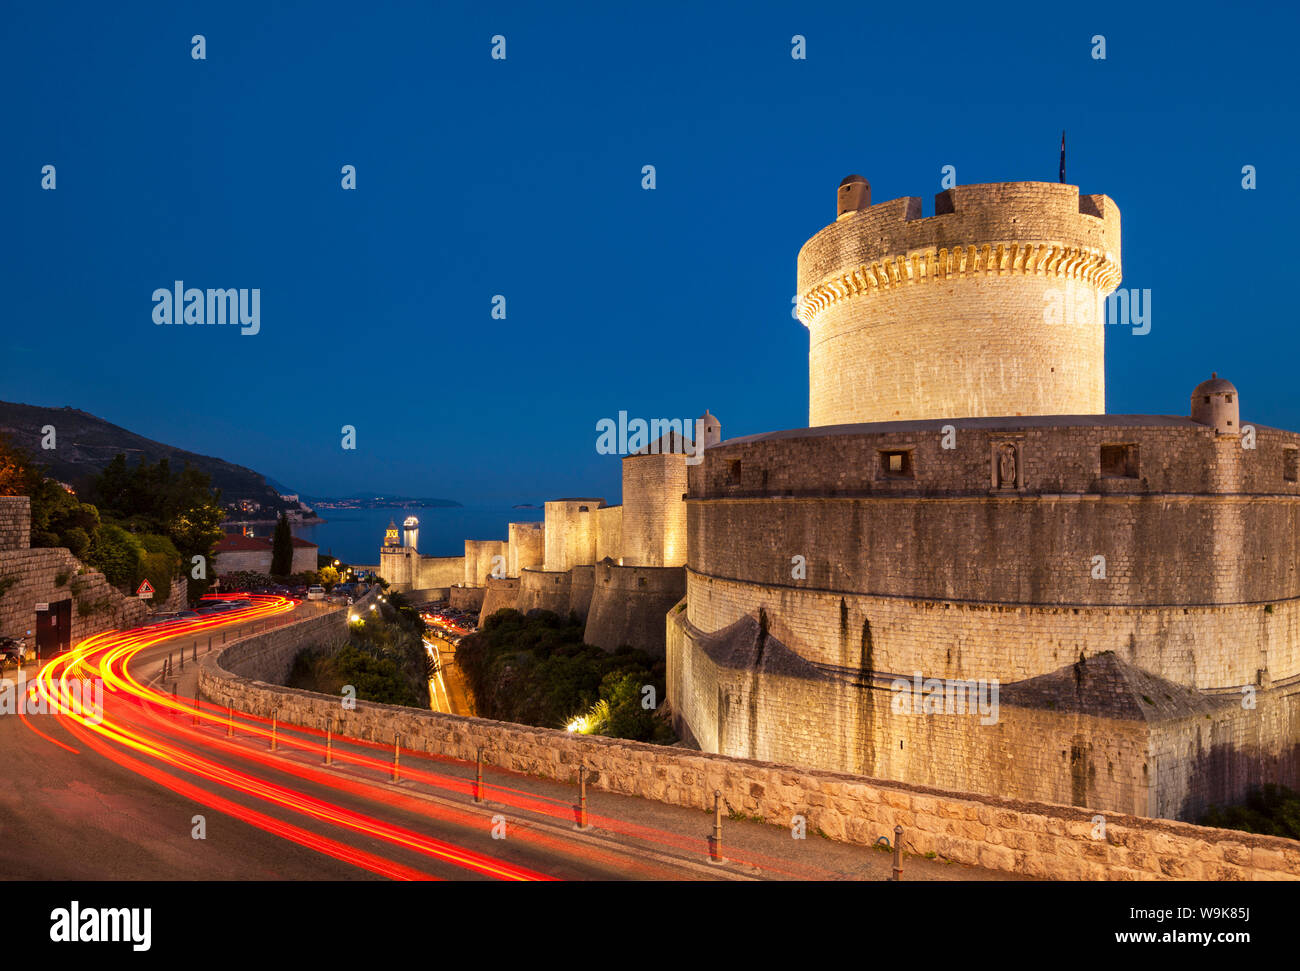 Minceta tower and city walls with traffic light trails, Dubrovnik Old Town, Dubrovnik, Dalmatian Coast, Croatia, Europe Stock Photo